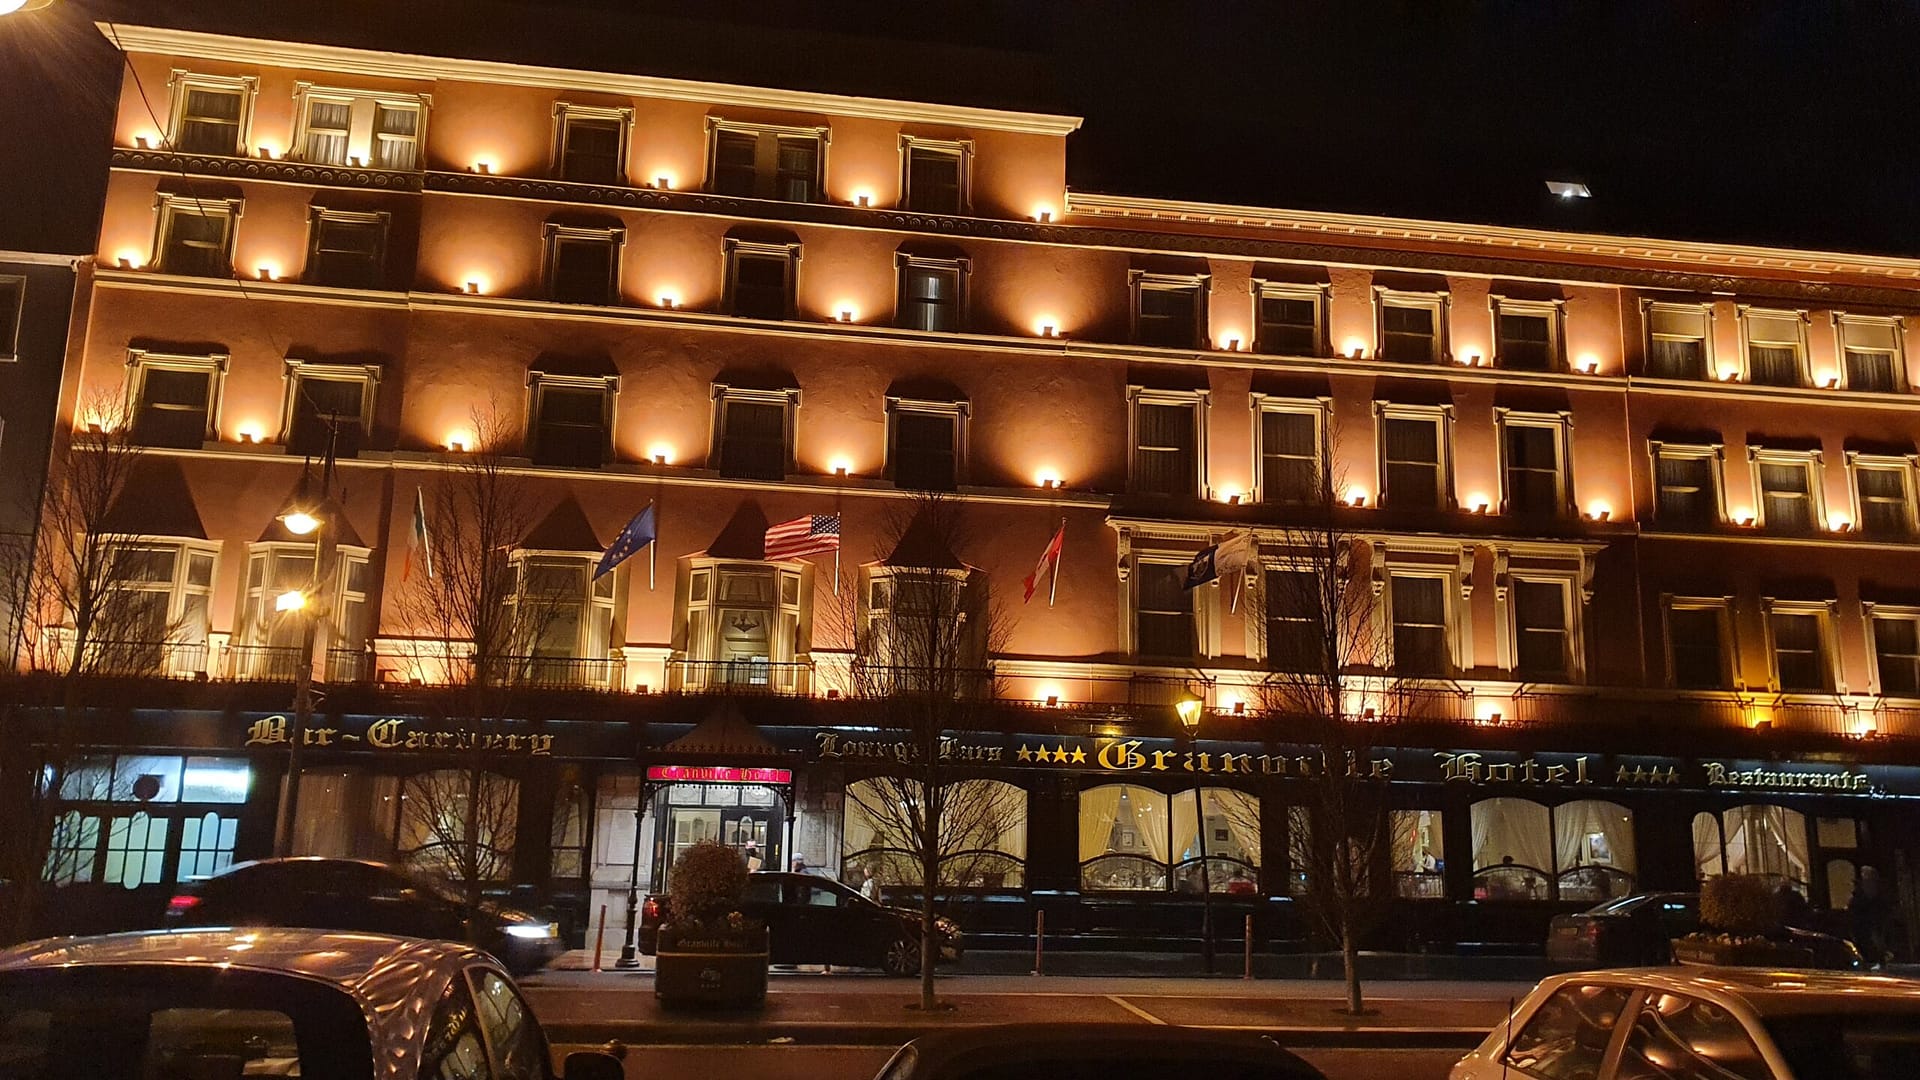 The elegant Granville Hotel in Waterford, Ireland